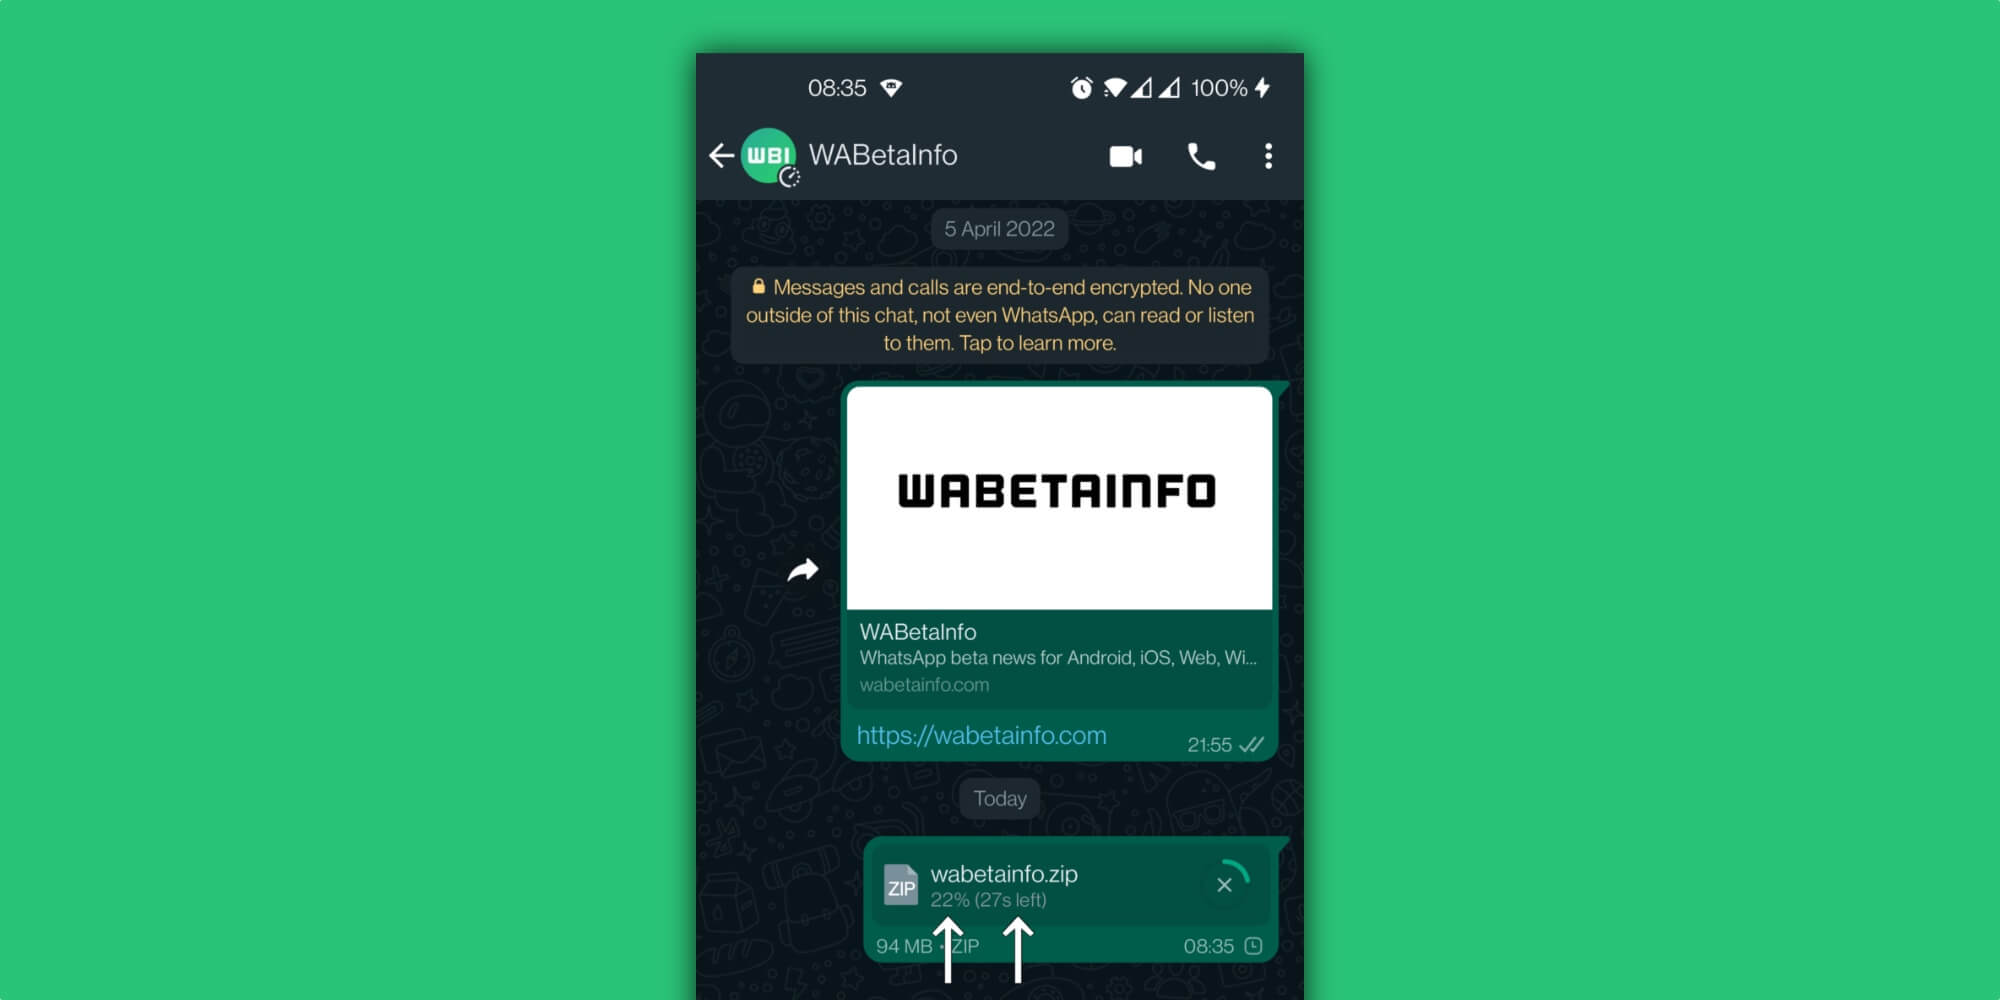 whatsapp-file-transfer-progress-9to5mac